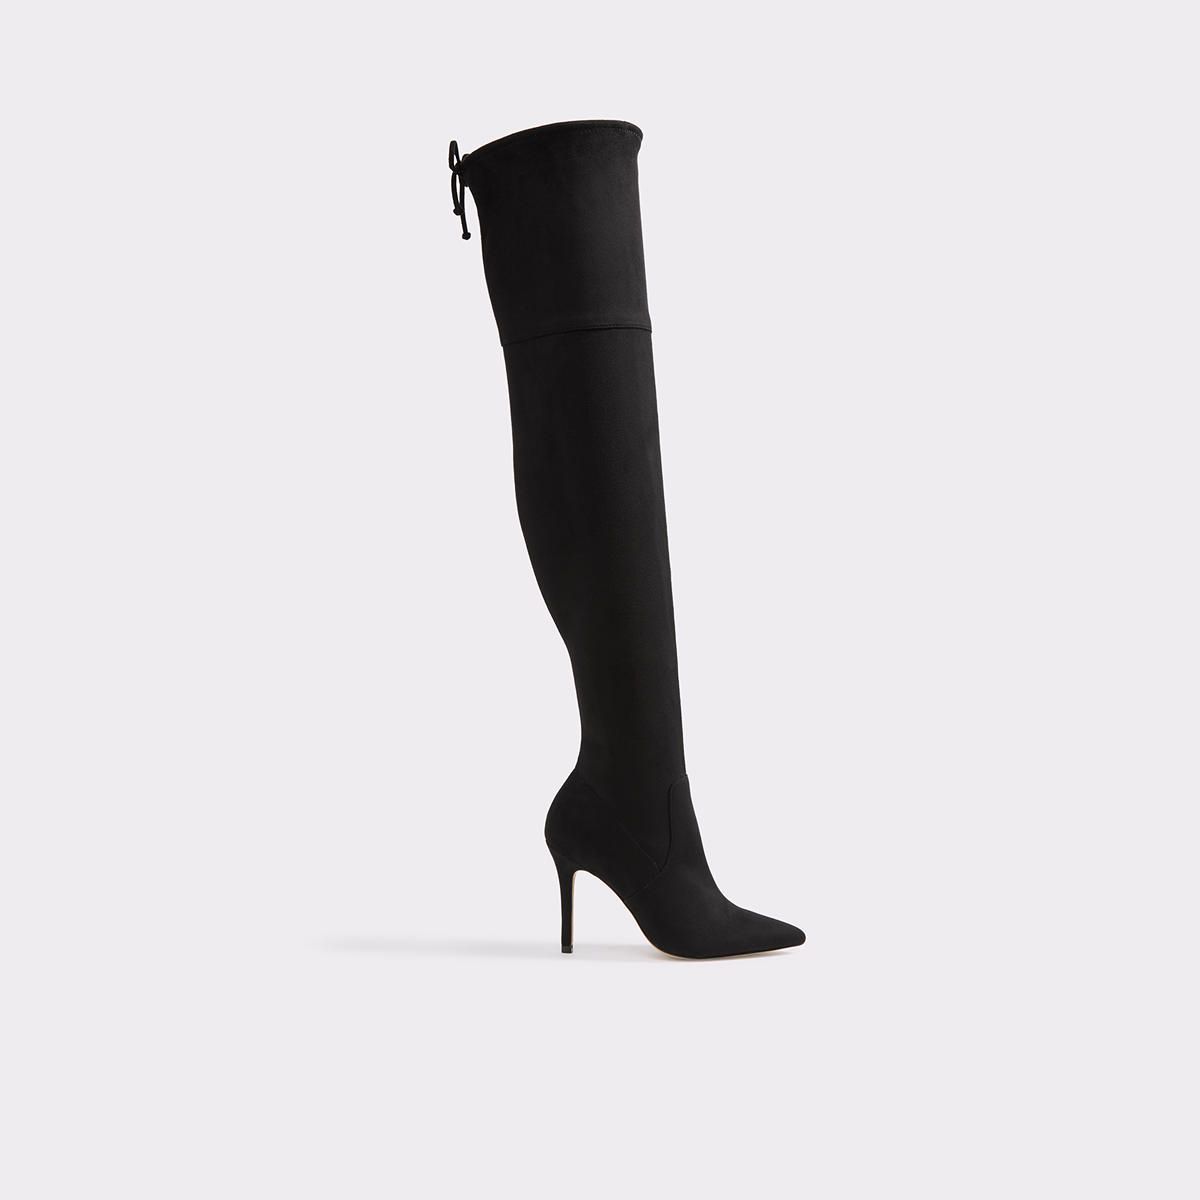 Fraresa Midnight Black Women's Sale boots at $60 & under | Aldo Shoes (US)